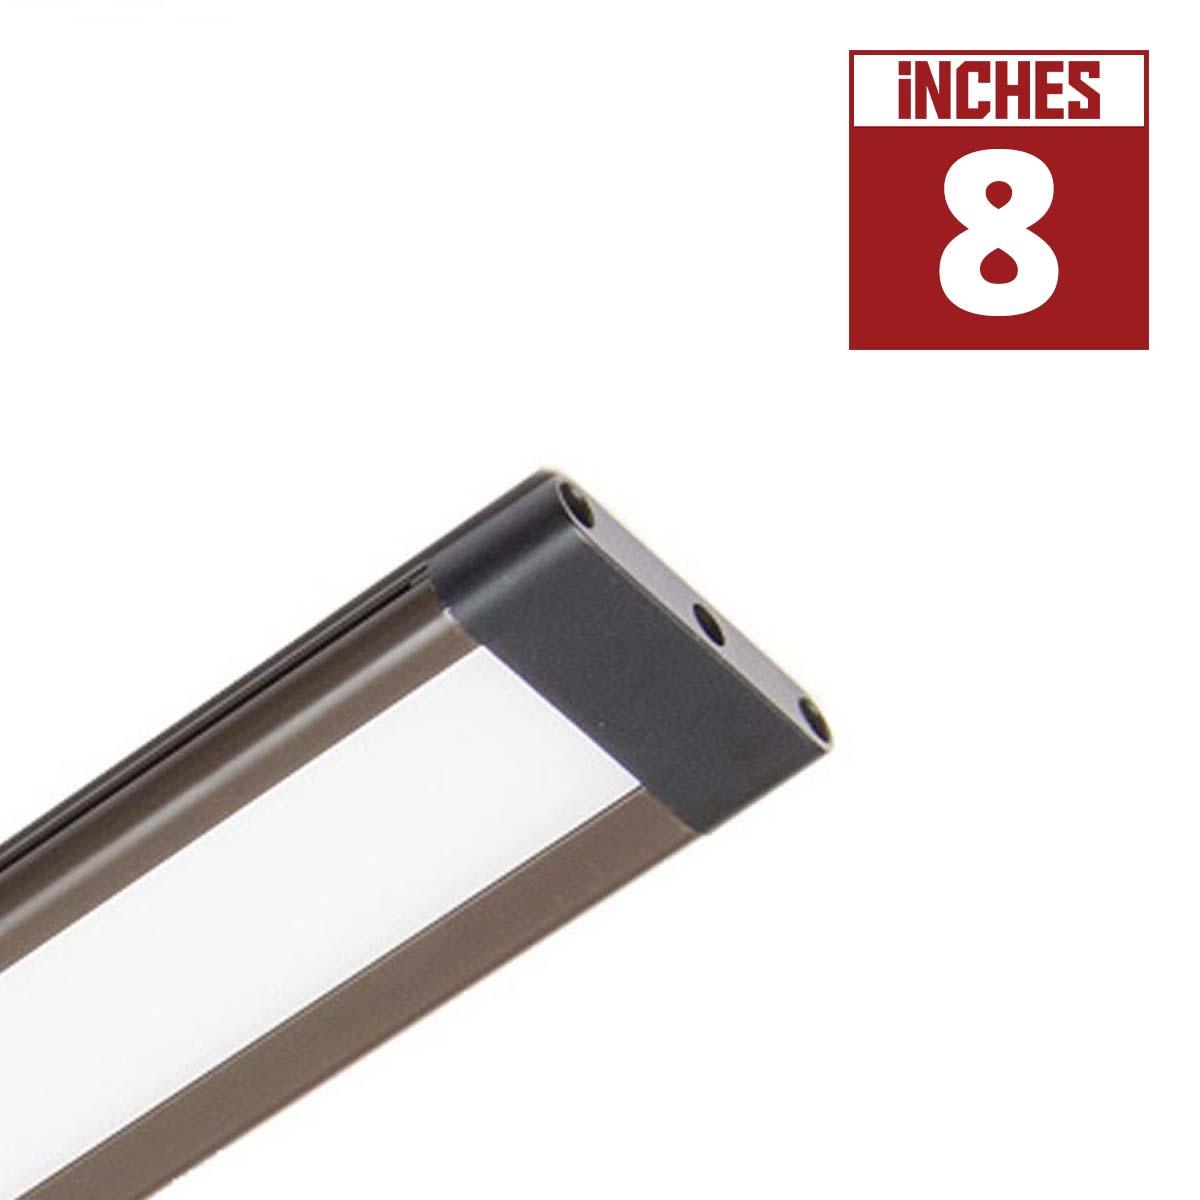 SlimEdge 8 Inch Plug In Under Cabinet LED Light, 150 Lumens, Linkable, 24V - Bees Lighting